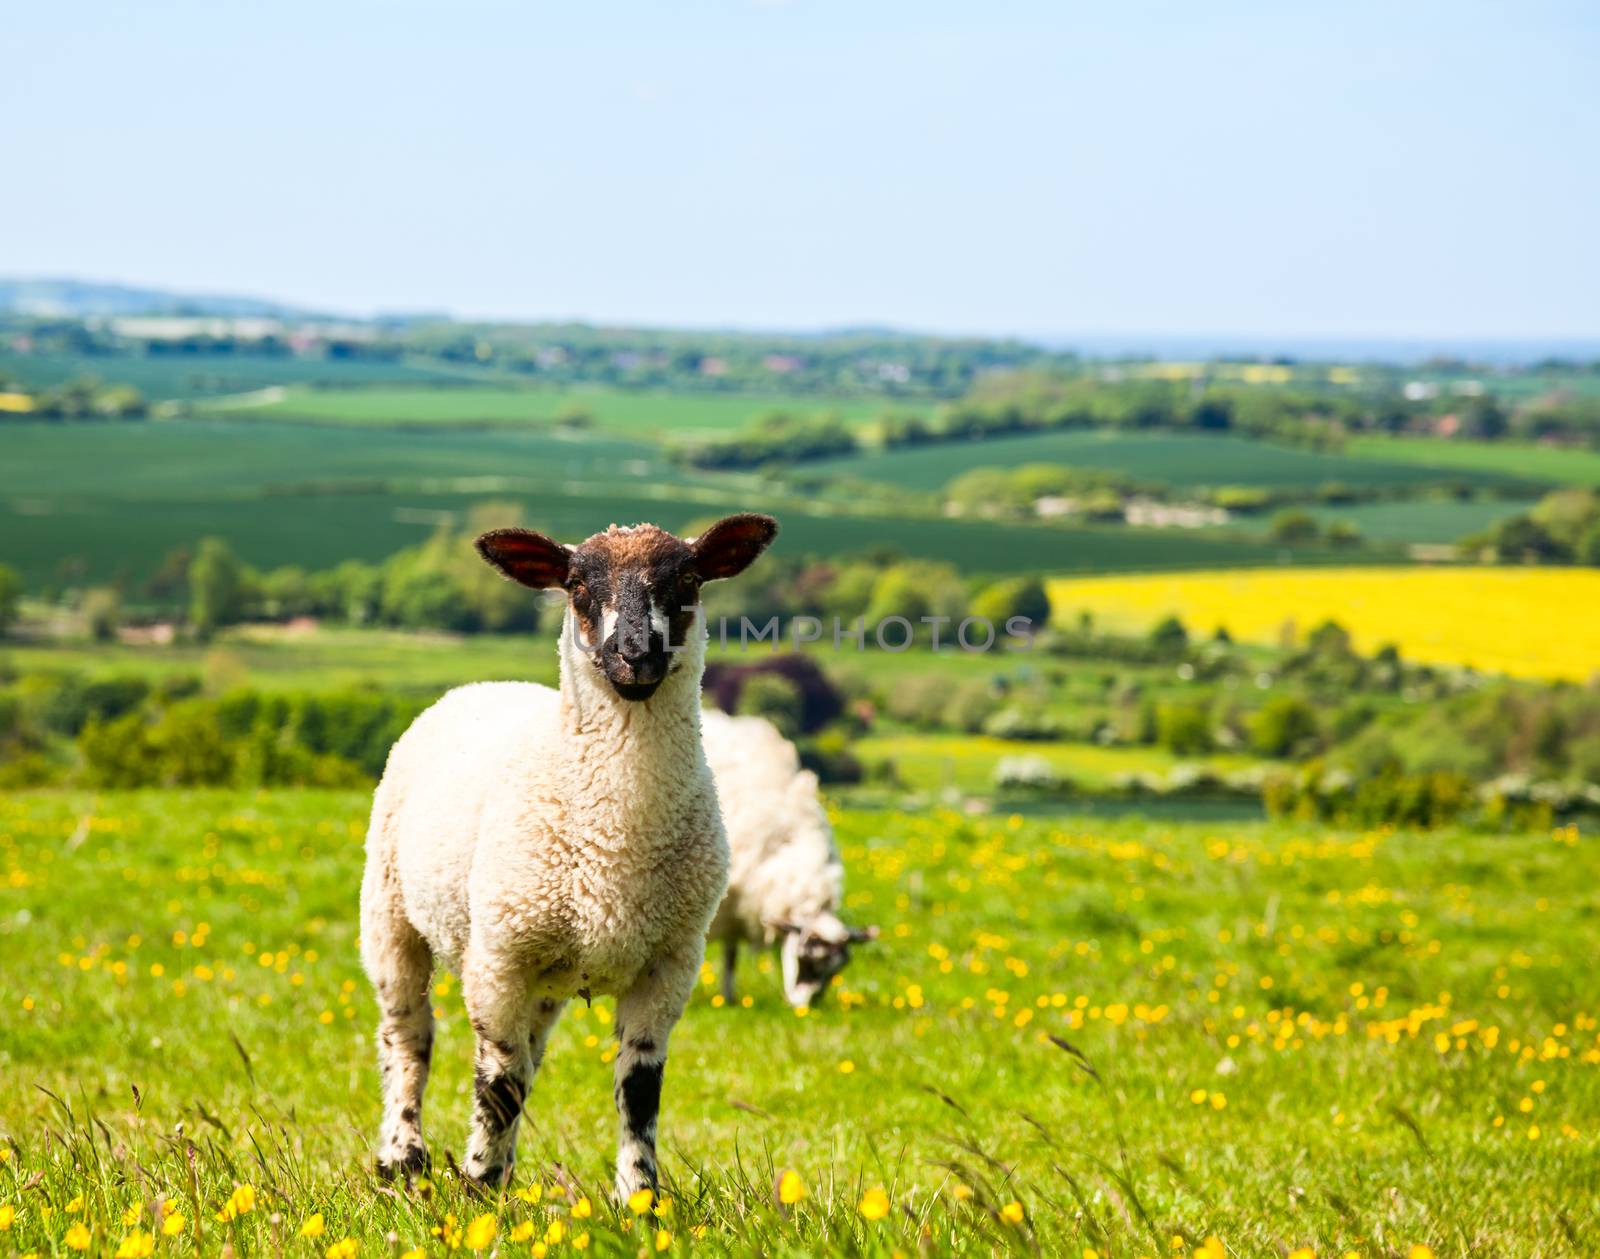 Grazing lamb by naumoid